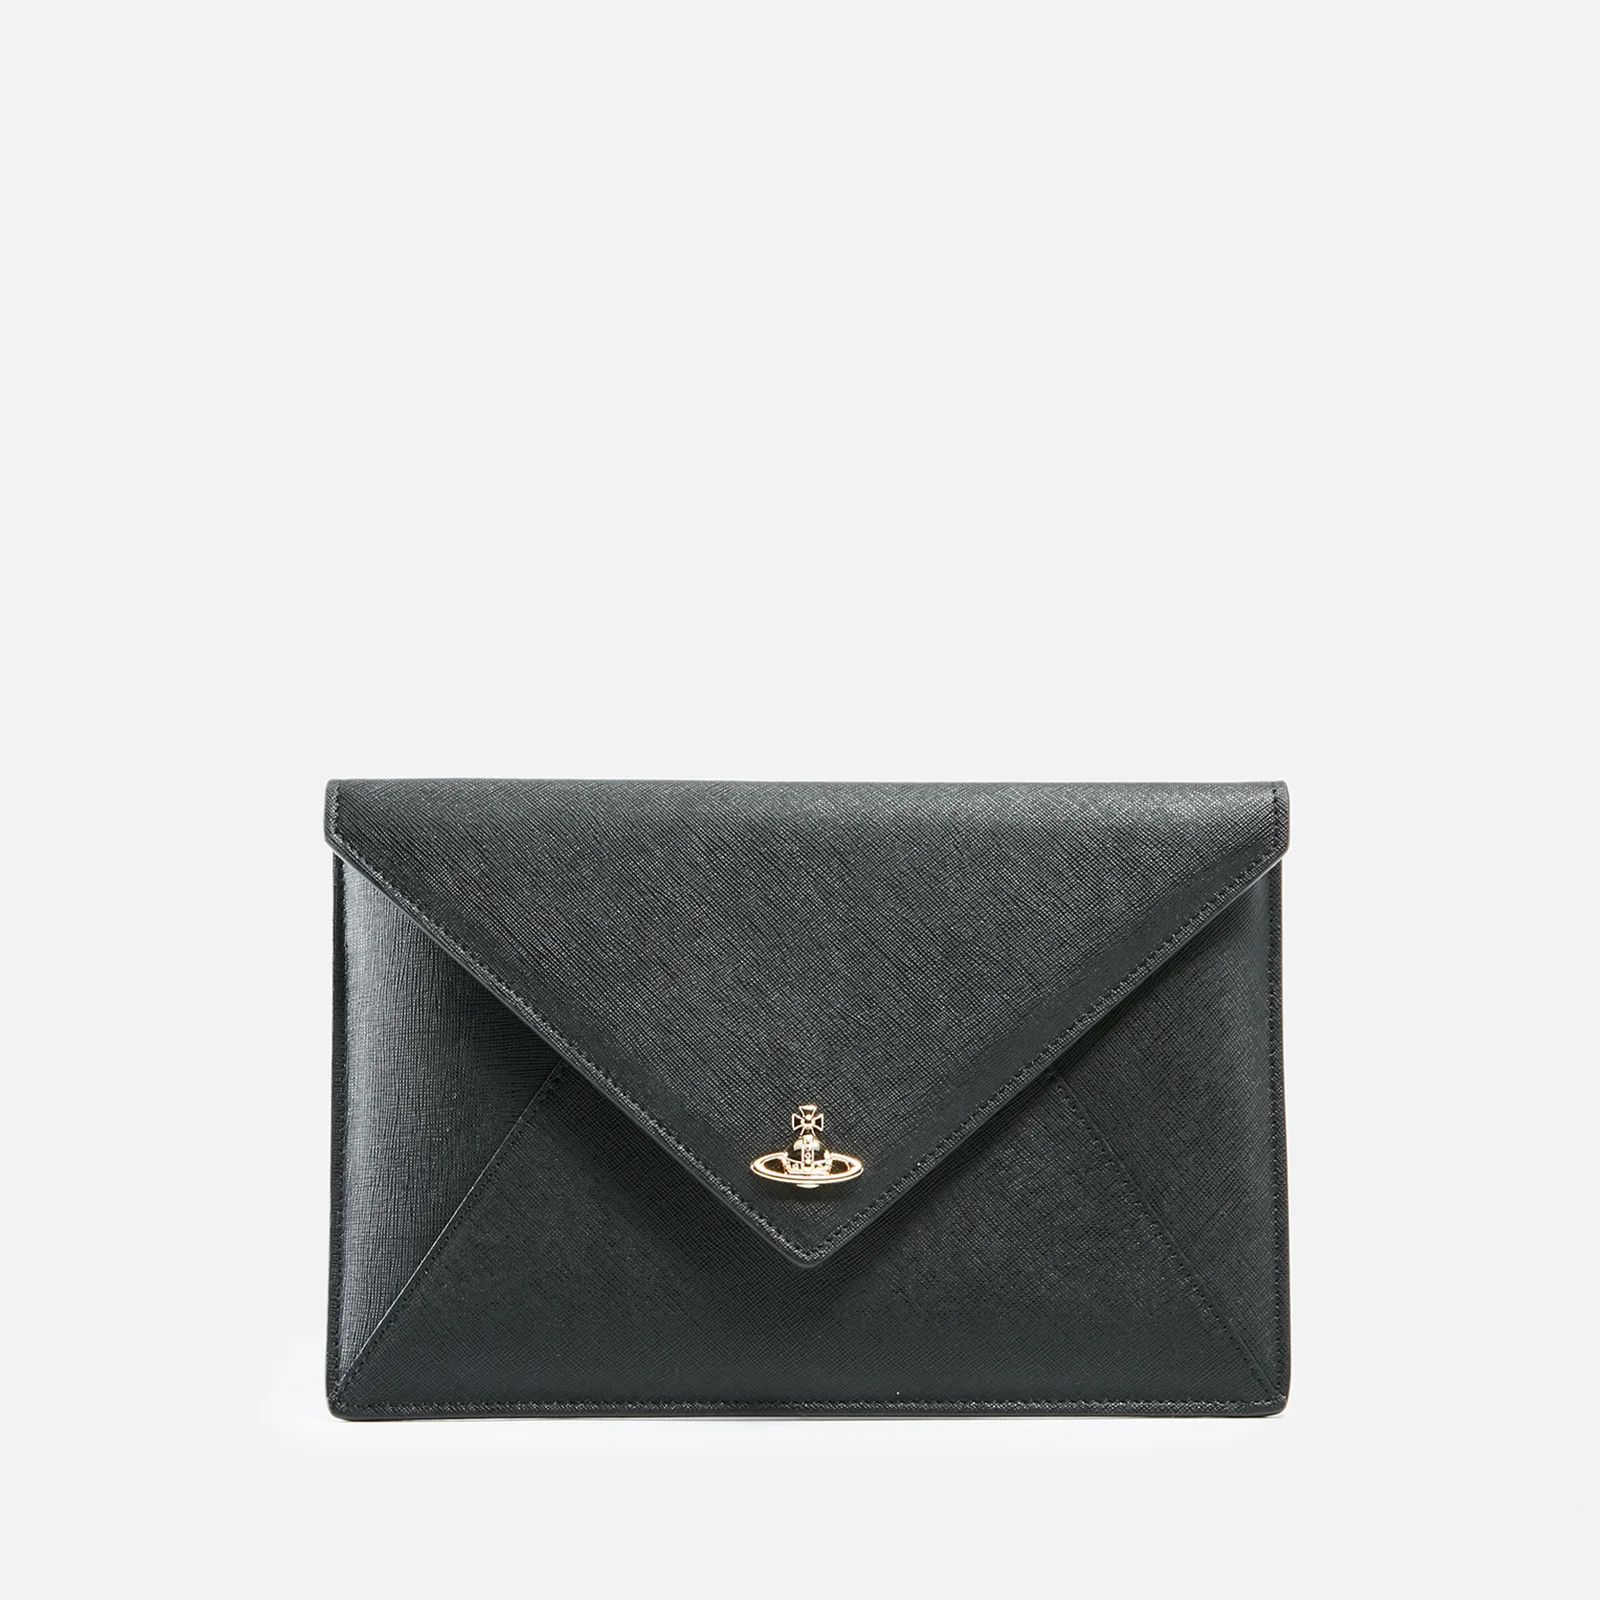 Vivienne Westwood Victoria Envelope Saffiano Leather Clutch Bag Image 1